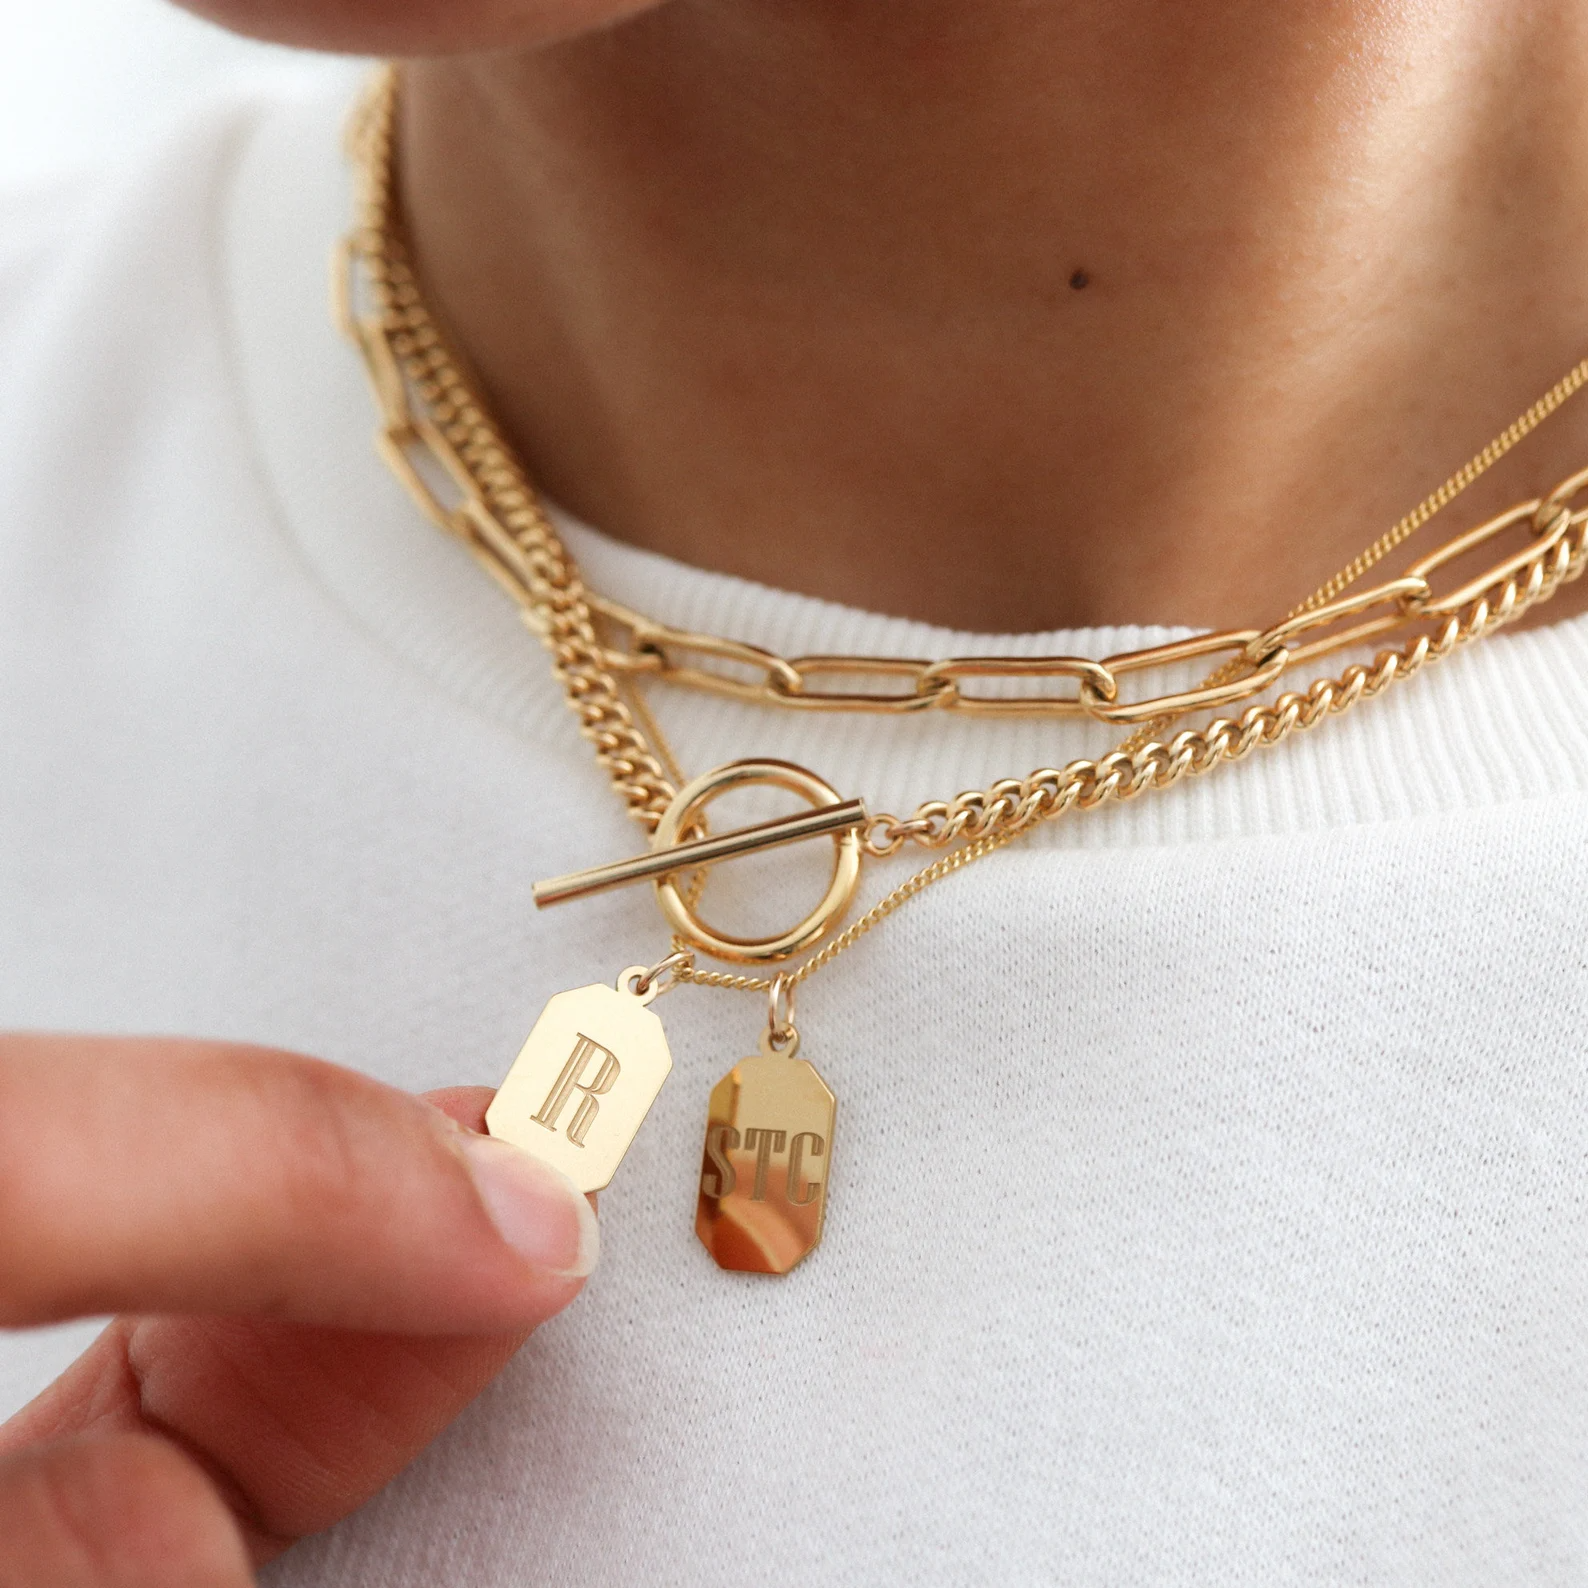 Gold Lock & Key Initial Pendant Necklace - D